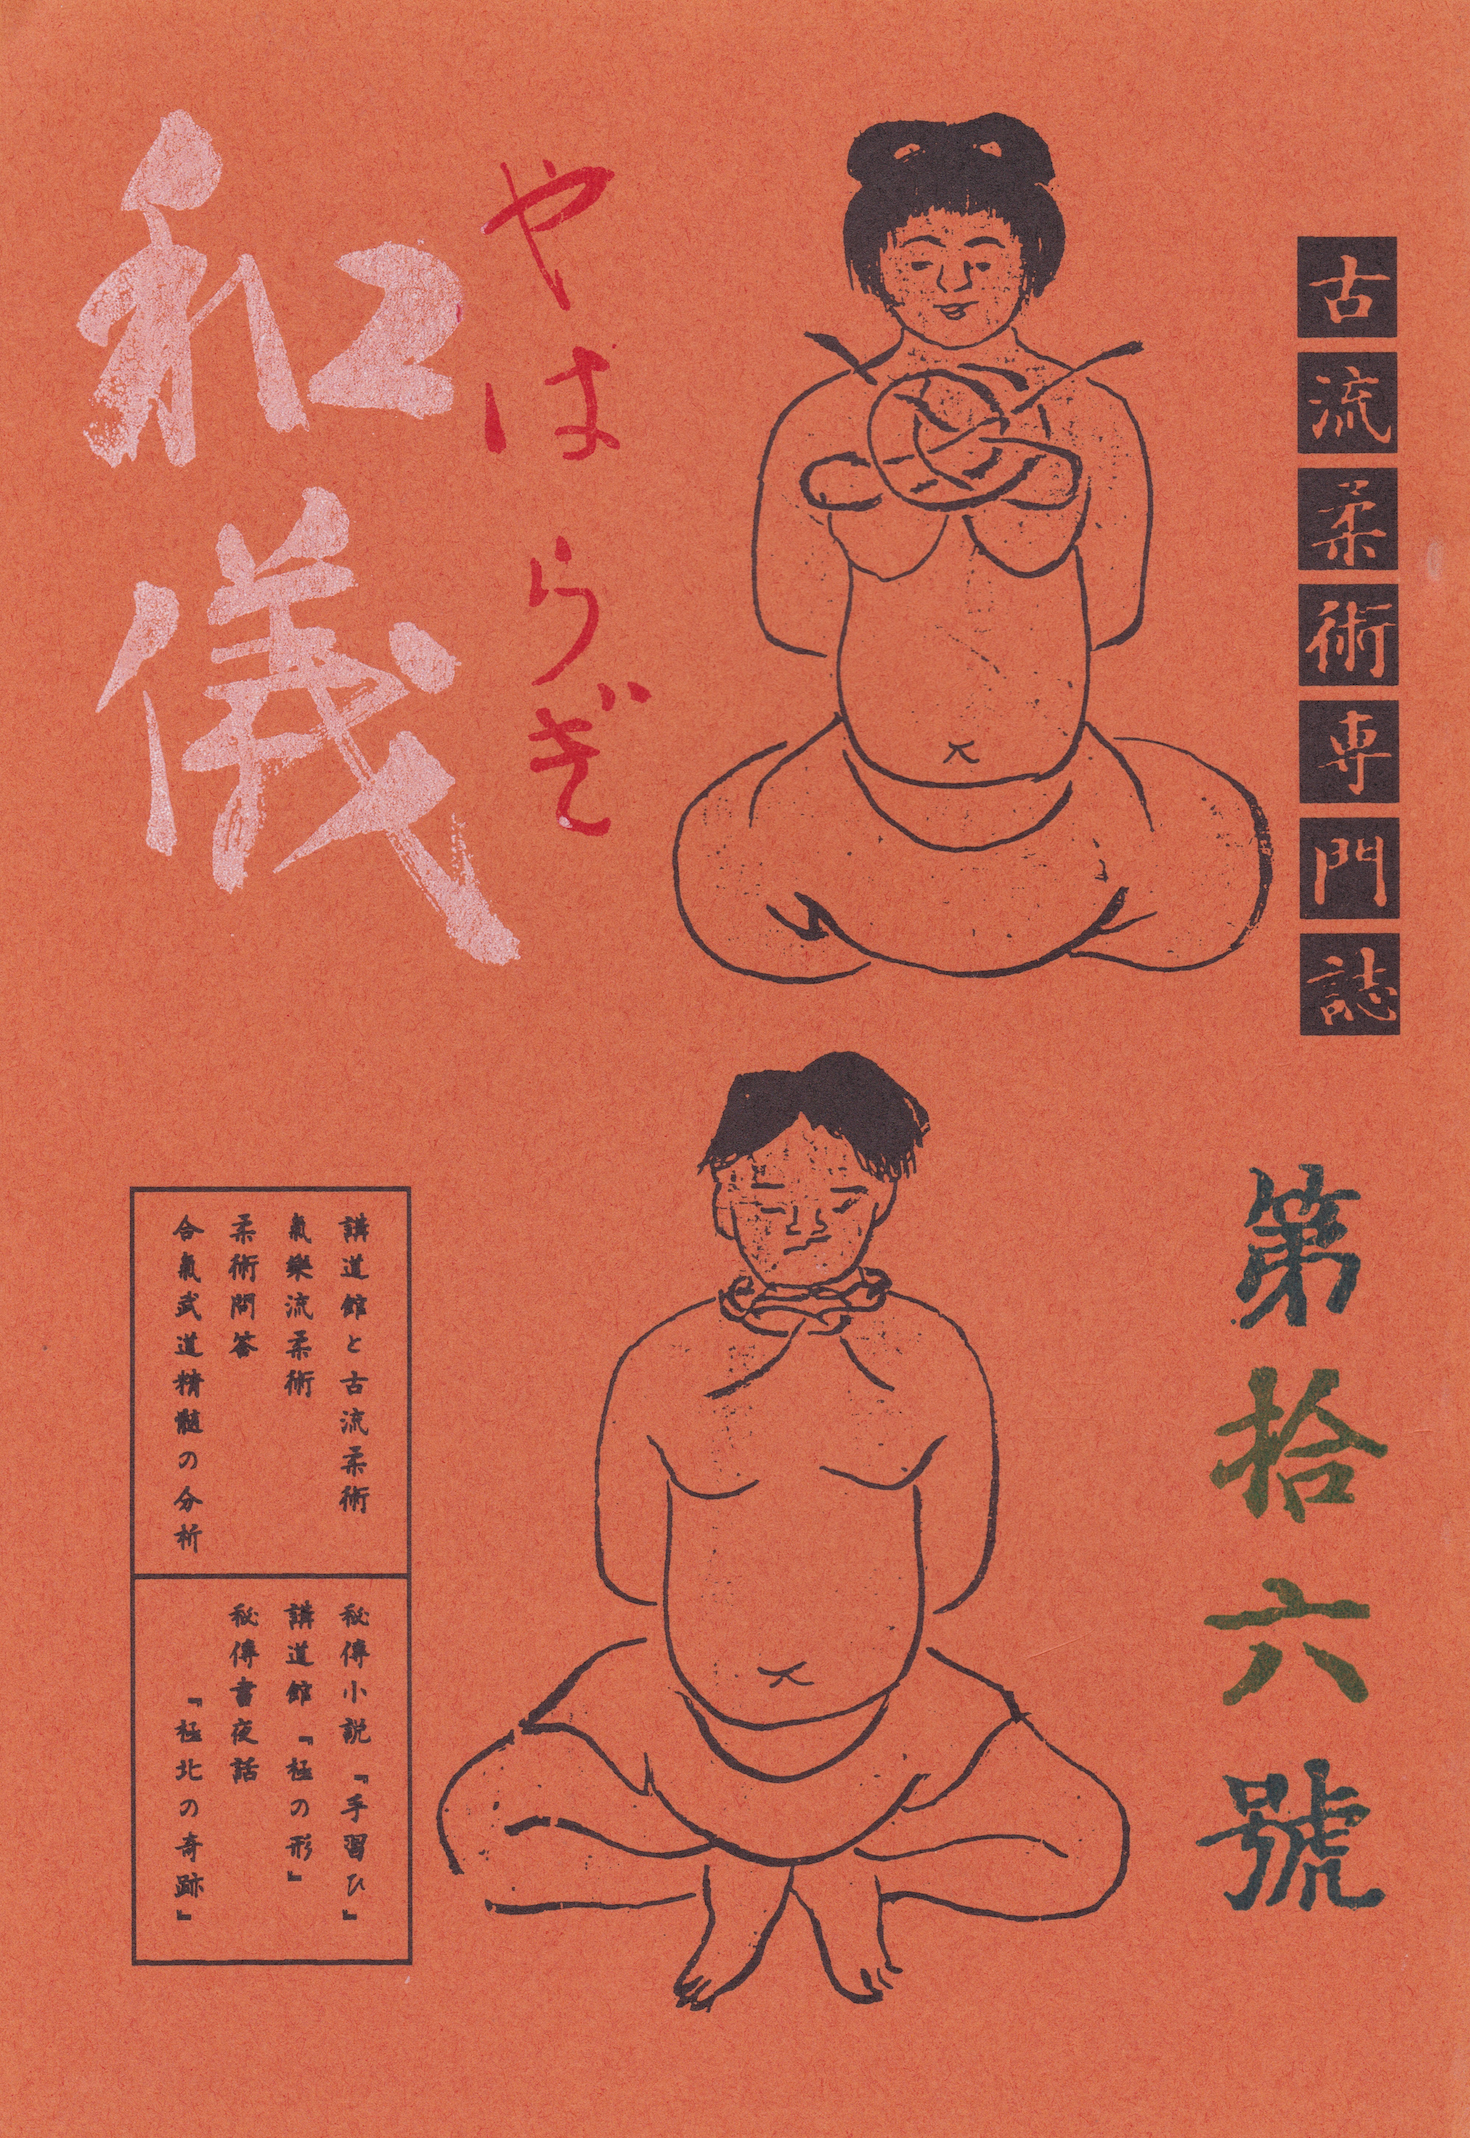 Yairagi Koryu Jujutsu Research Journal #16 (Preowned)